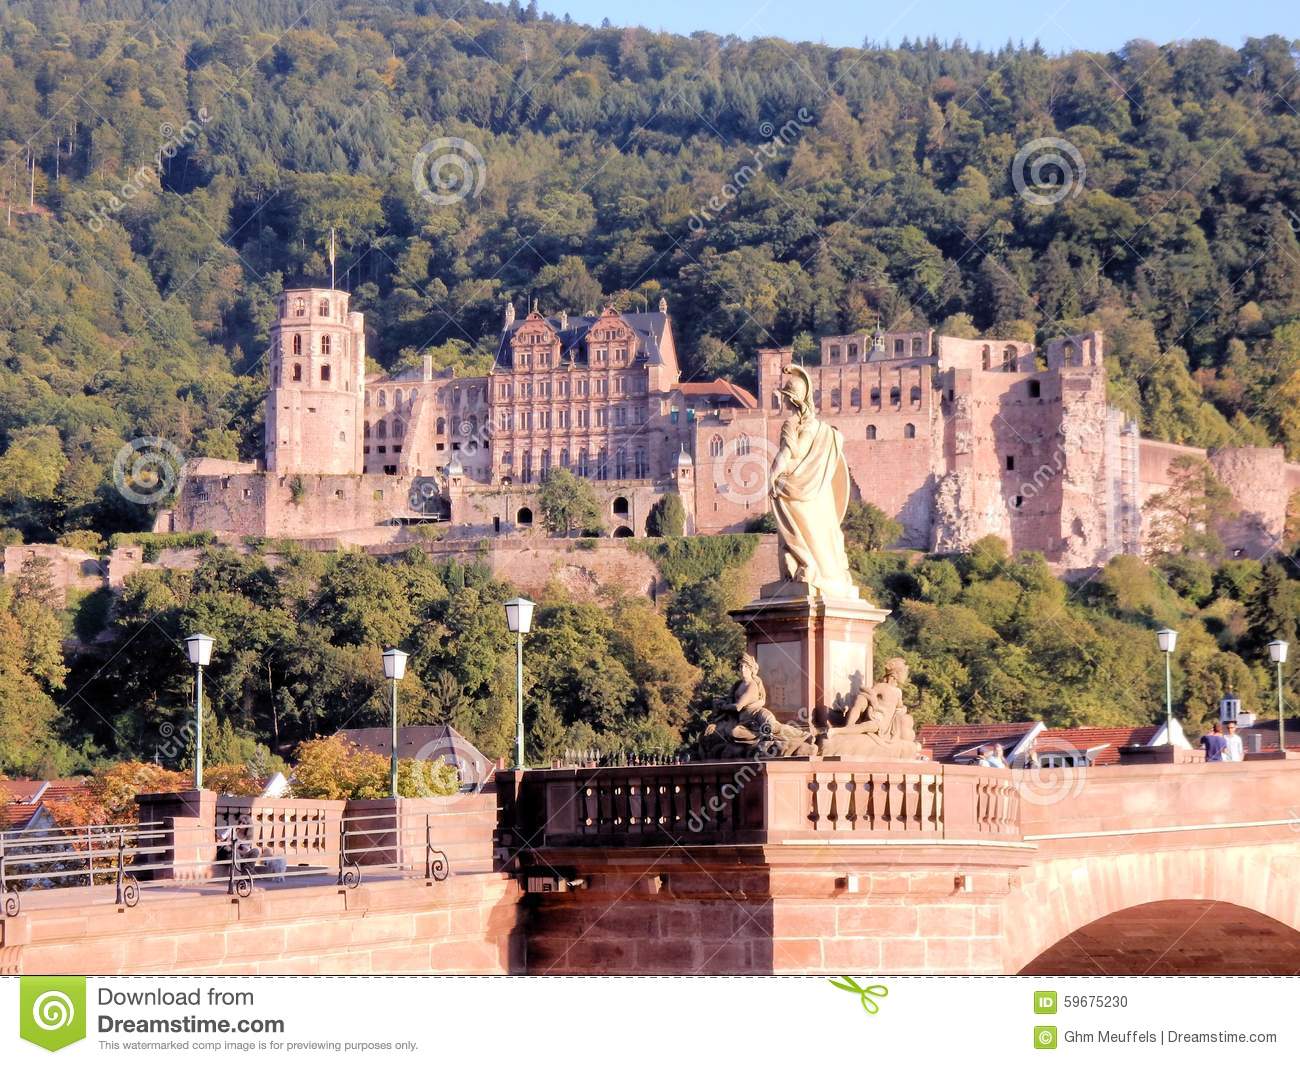 Heidelberg Castle.